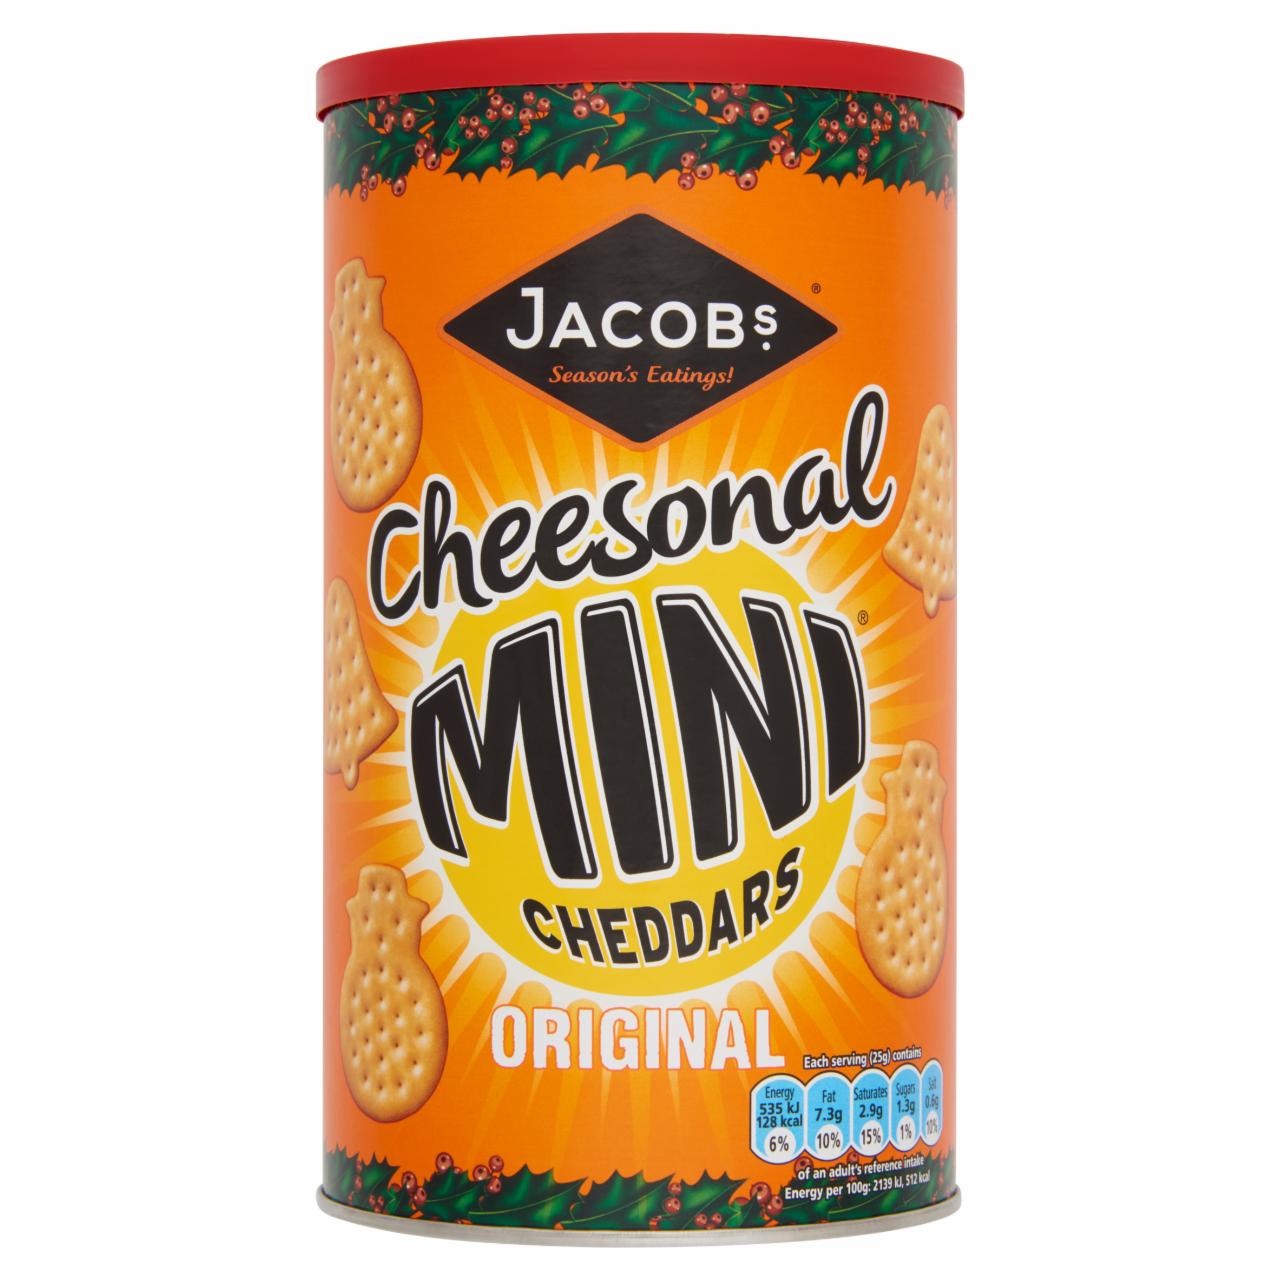 Képek - Jacob's Cheesonal sajtos minikeksz eredeti cheddar sajttal 260 g